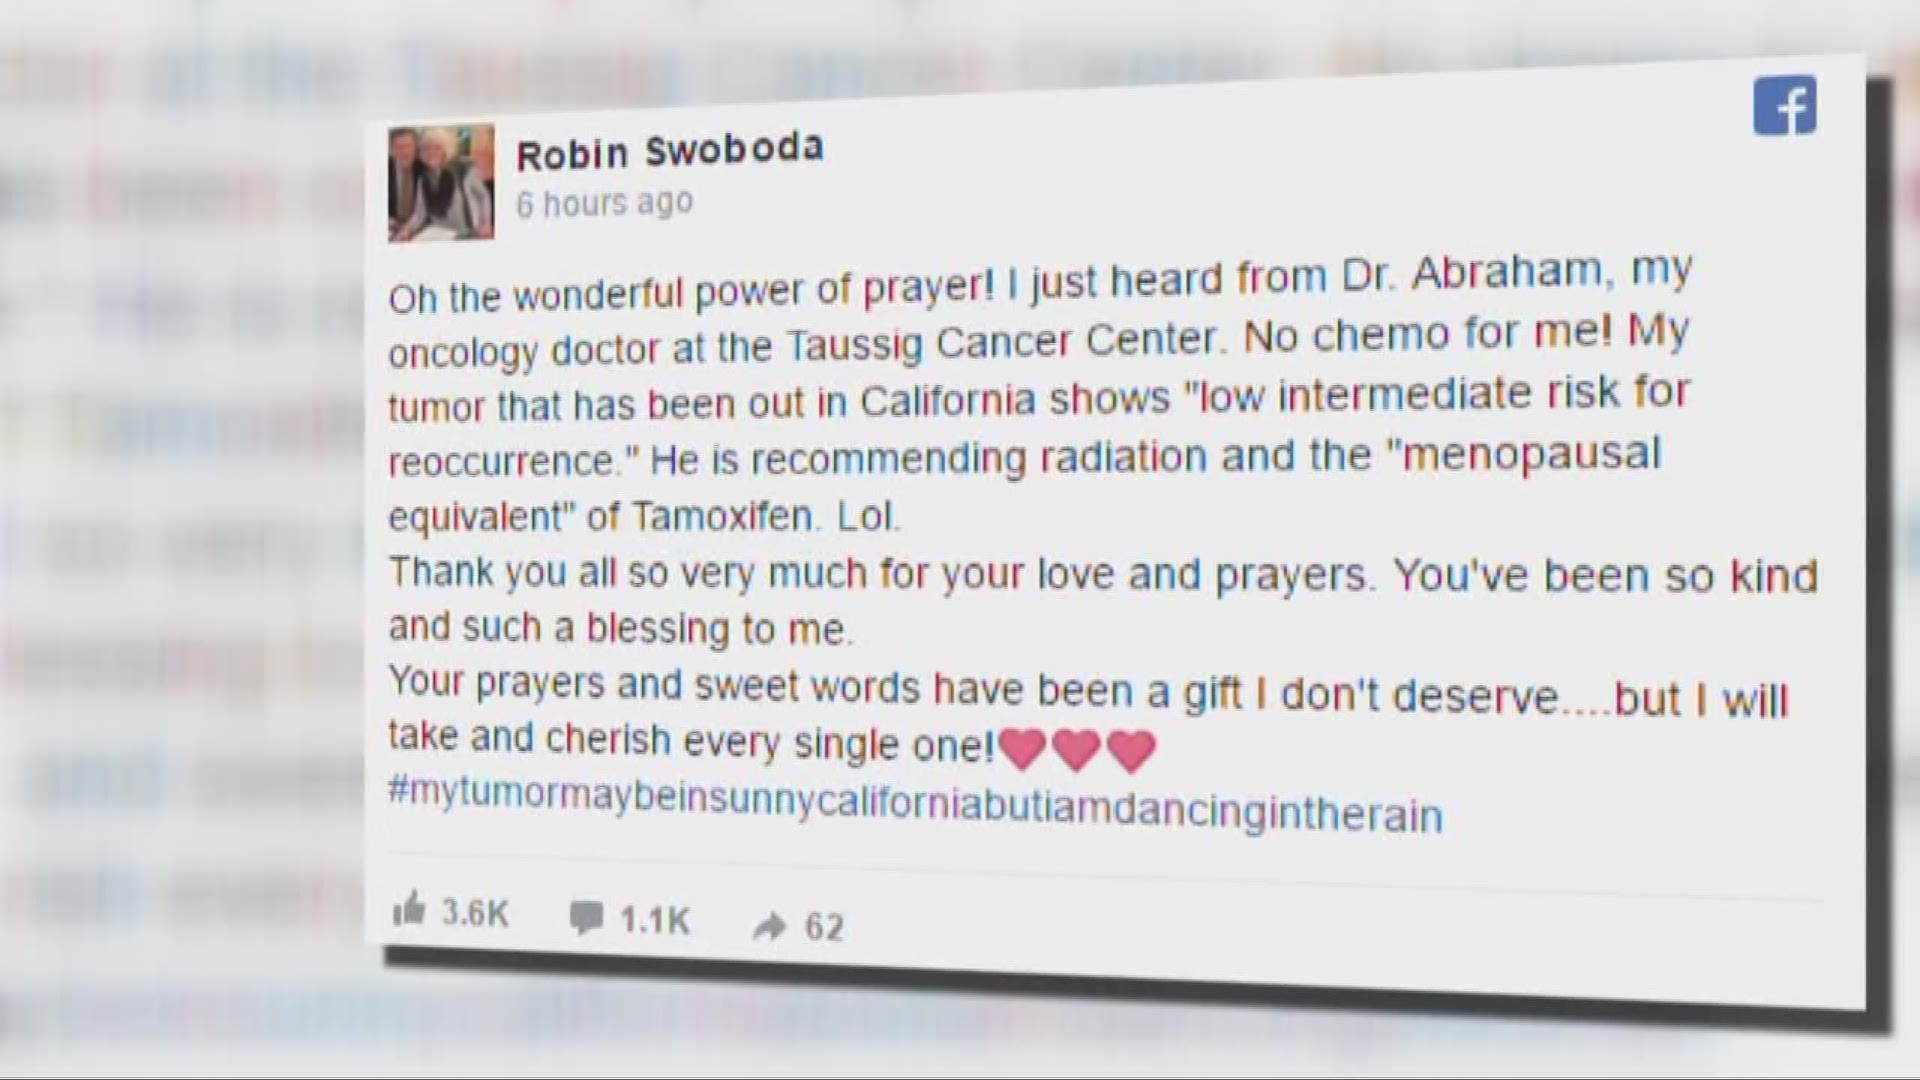 Robin Swoboda shares encouraging cancer news on Facebook